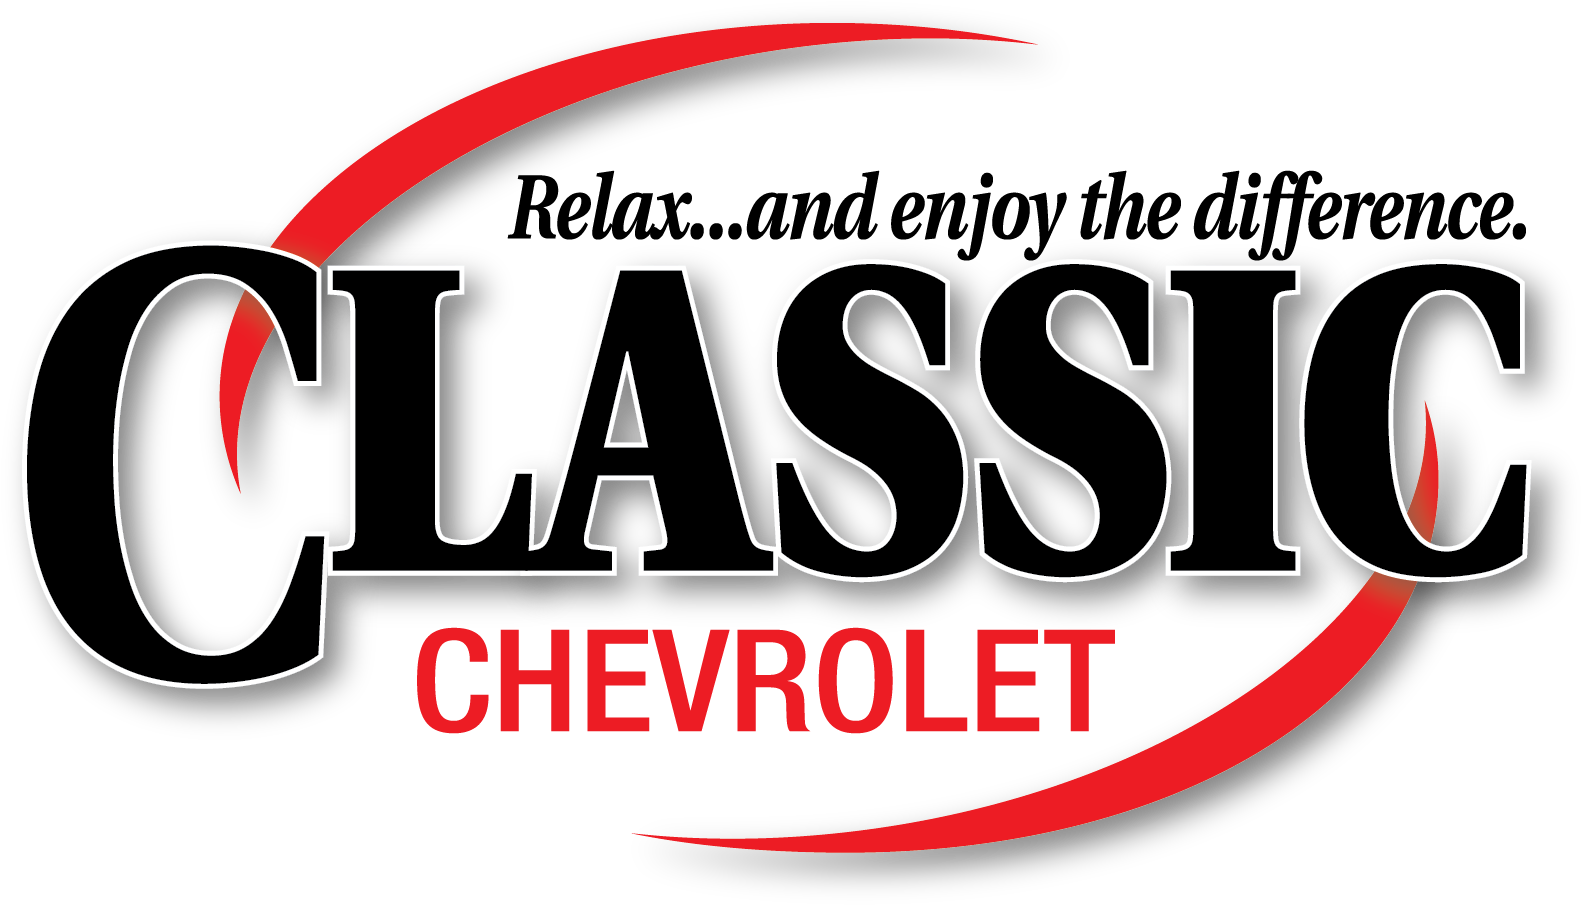 Classic Chevrolet - Grapevine - Classic Chevrolet Sugar Land (1600x920)